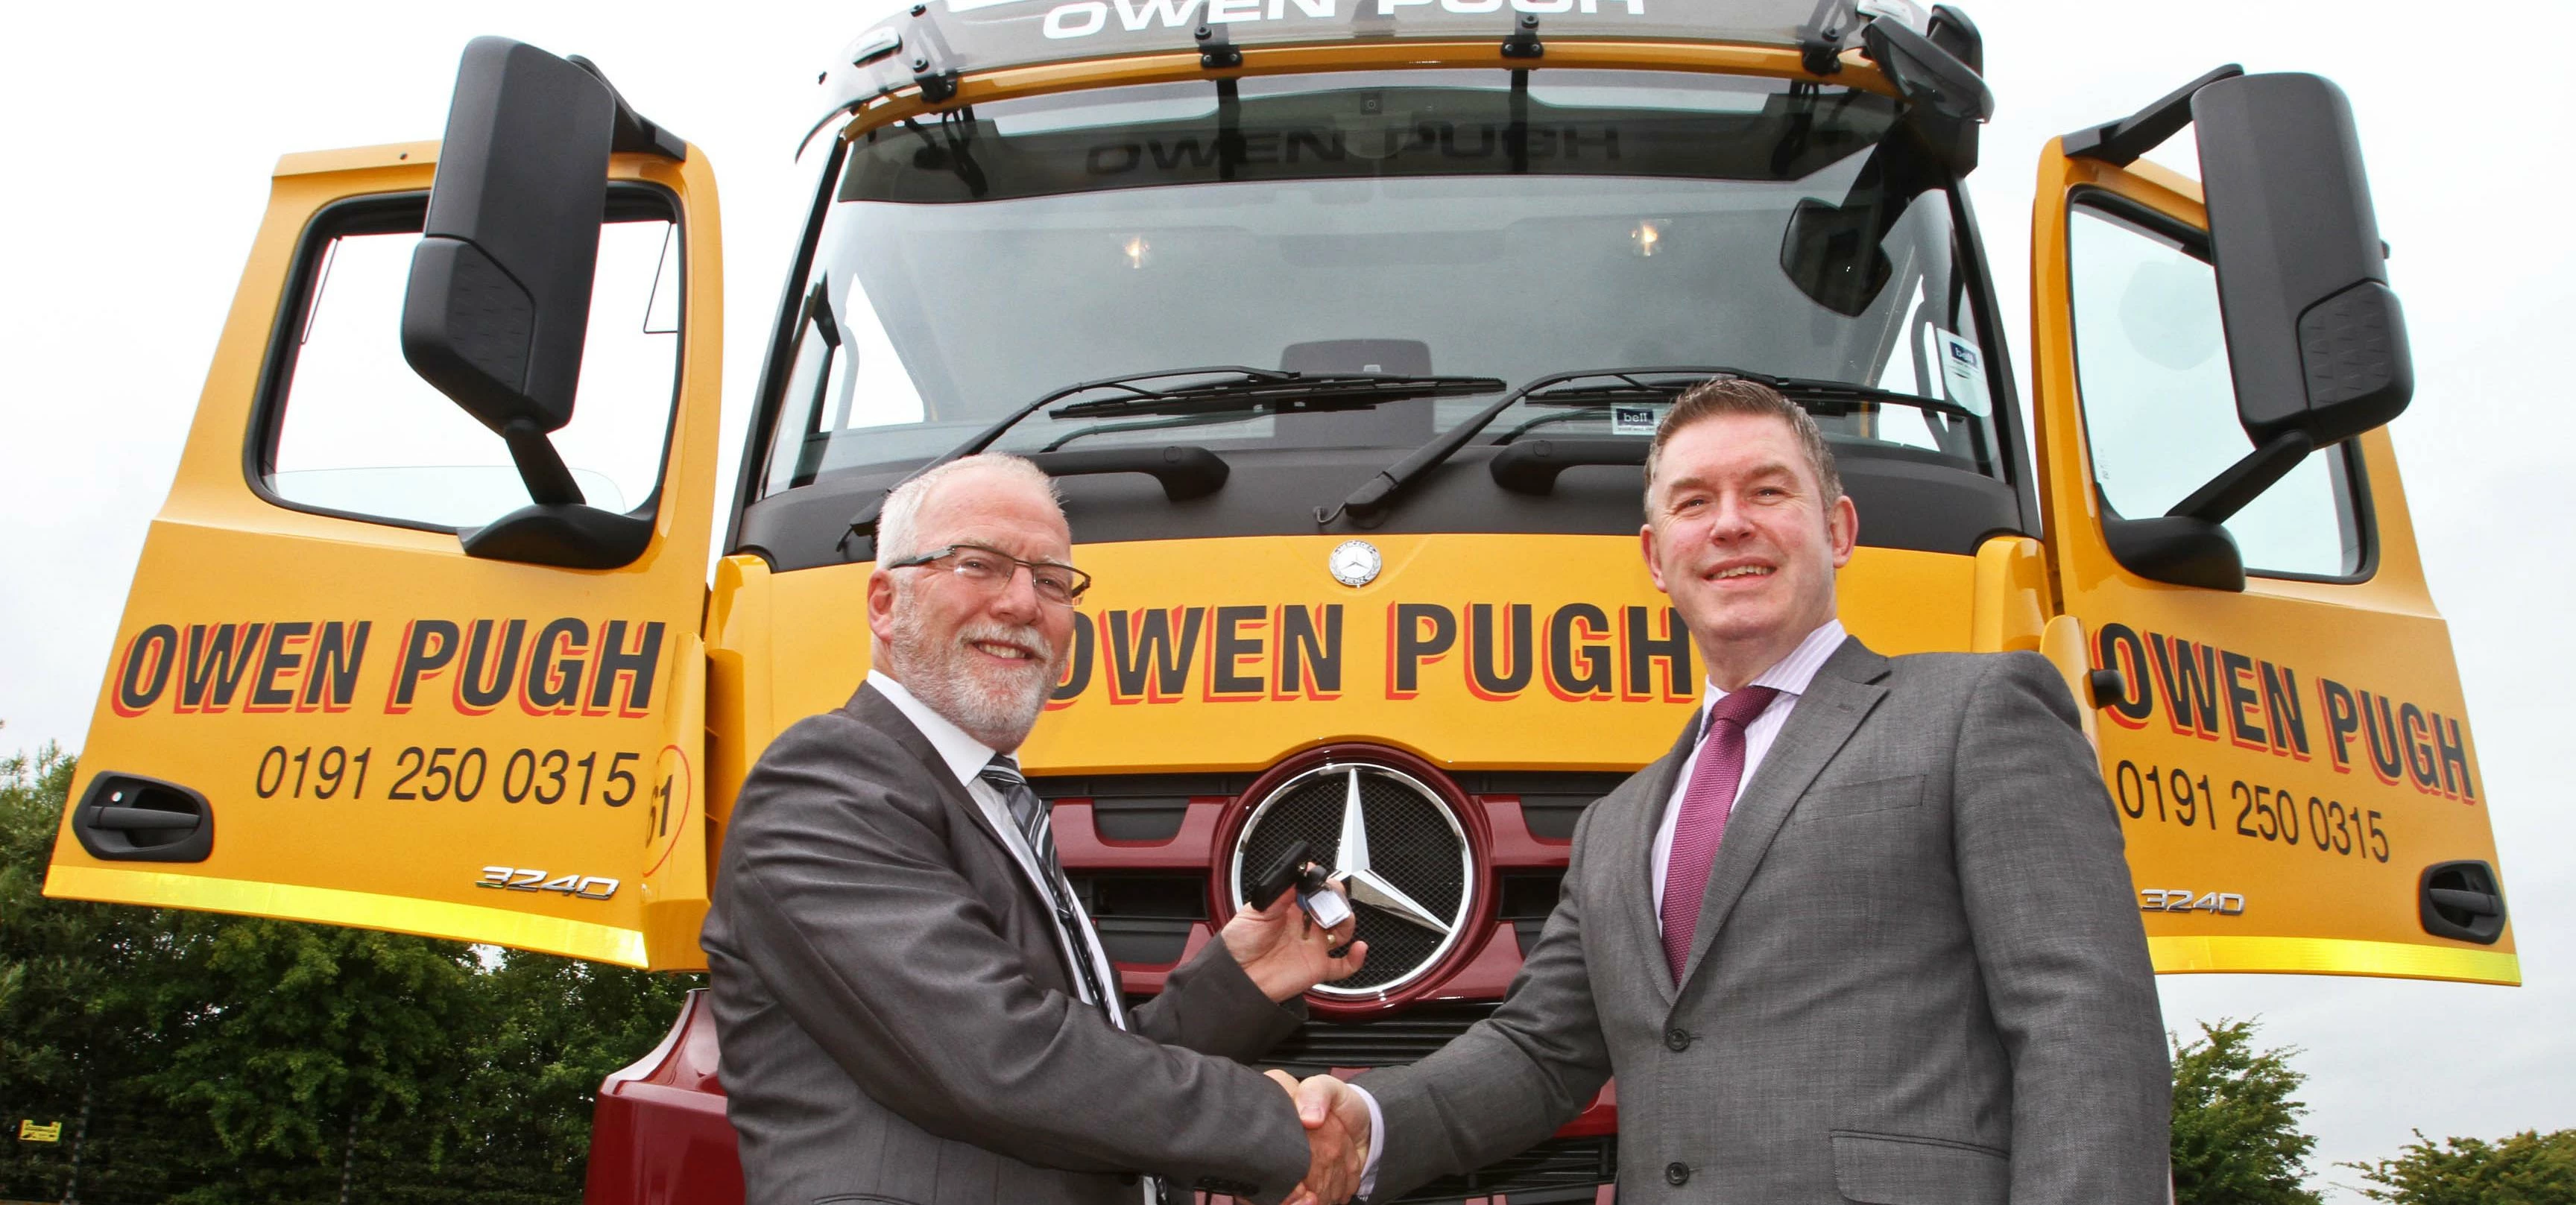 Trevor Simmons of Bell Truck & Van presents Owen Pugh's Paul Cockburn with the keys to the new truck